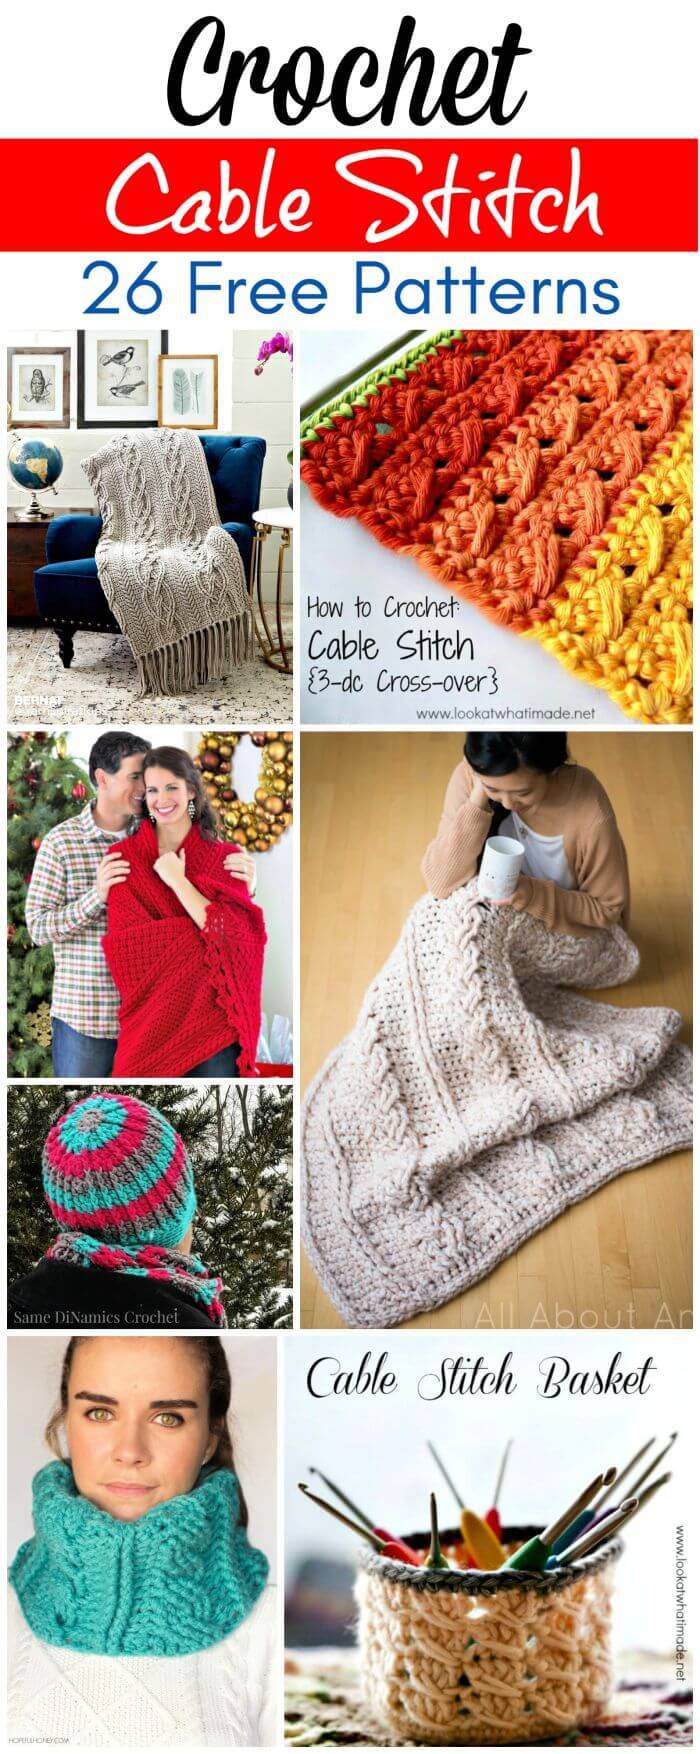 26 Free Crochet Cable Stitch Patterns, Crochet Stitches, Free Crochet Patterns, DIY Crafts